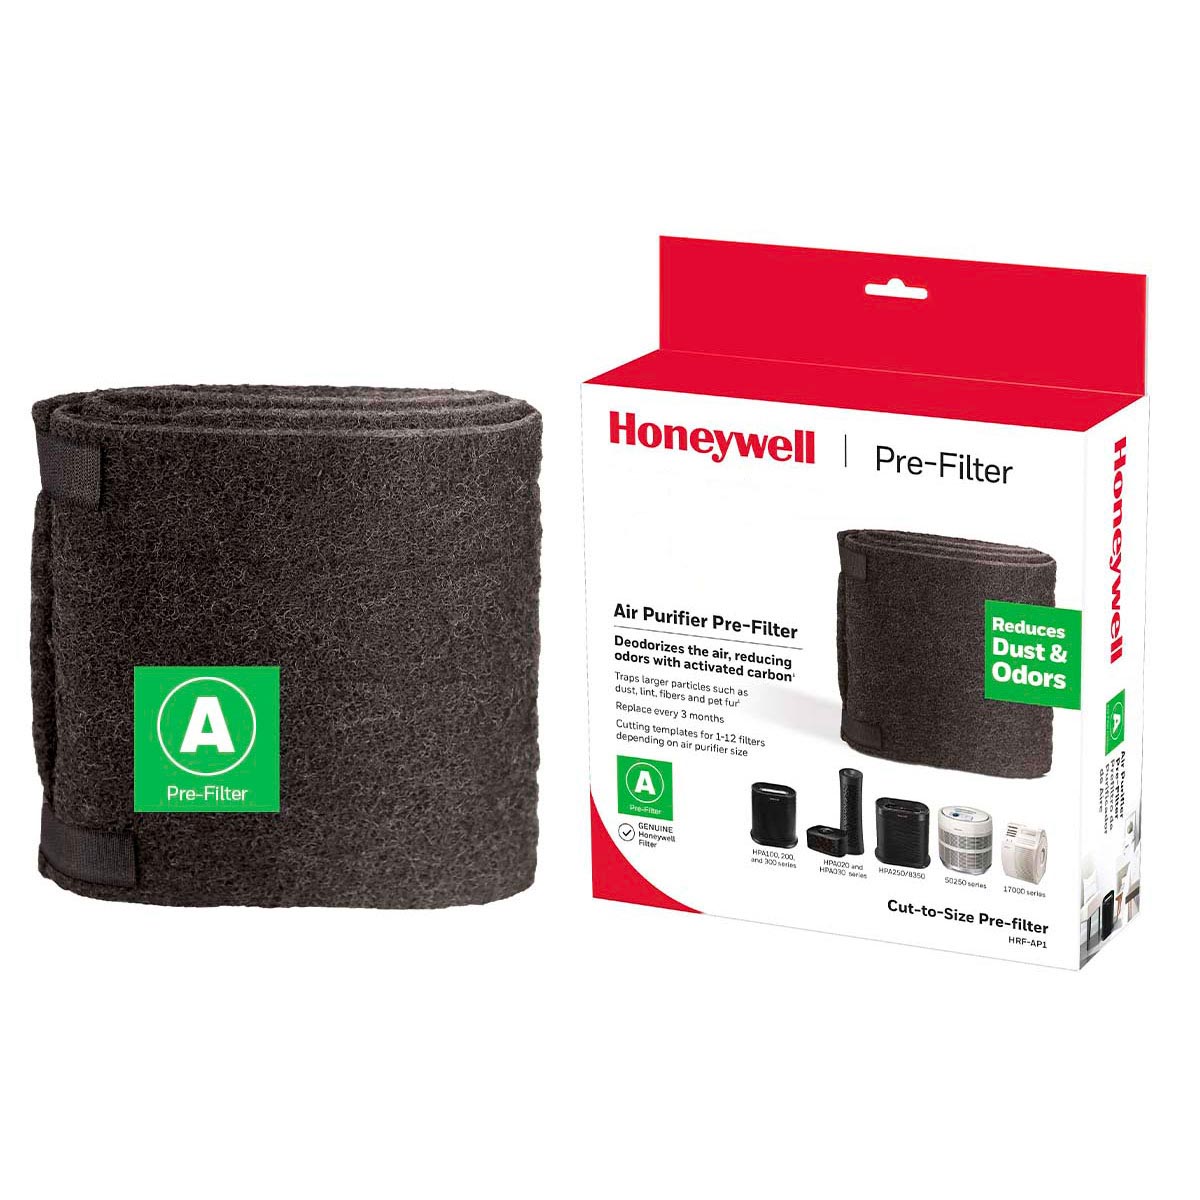 Air Purifier Pre-Filter for Honeywell 50250-50259 Series